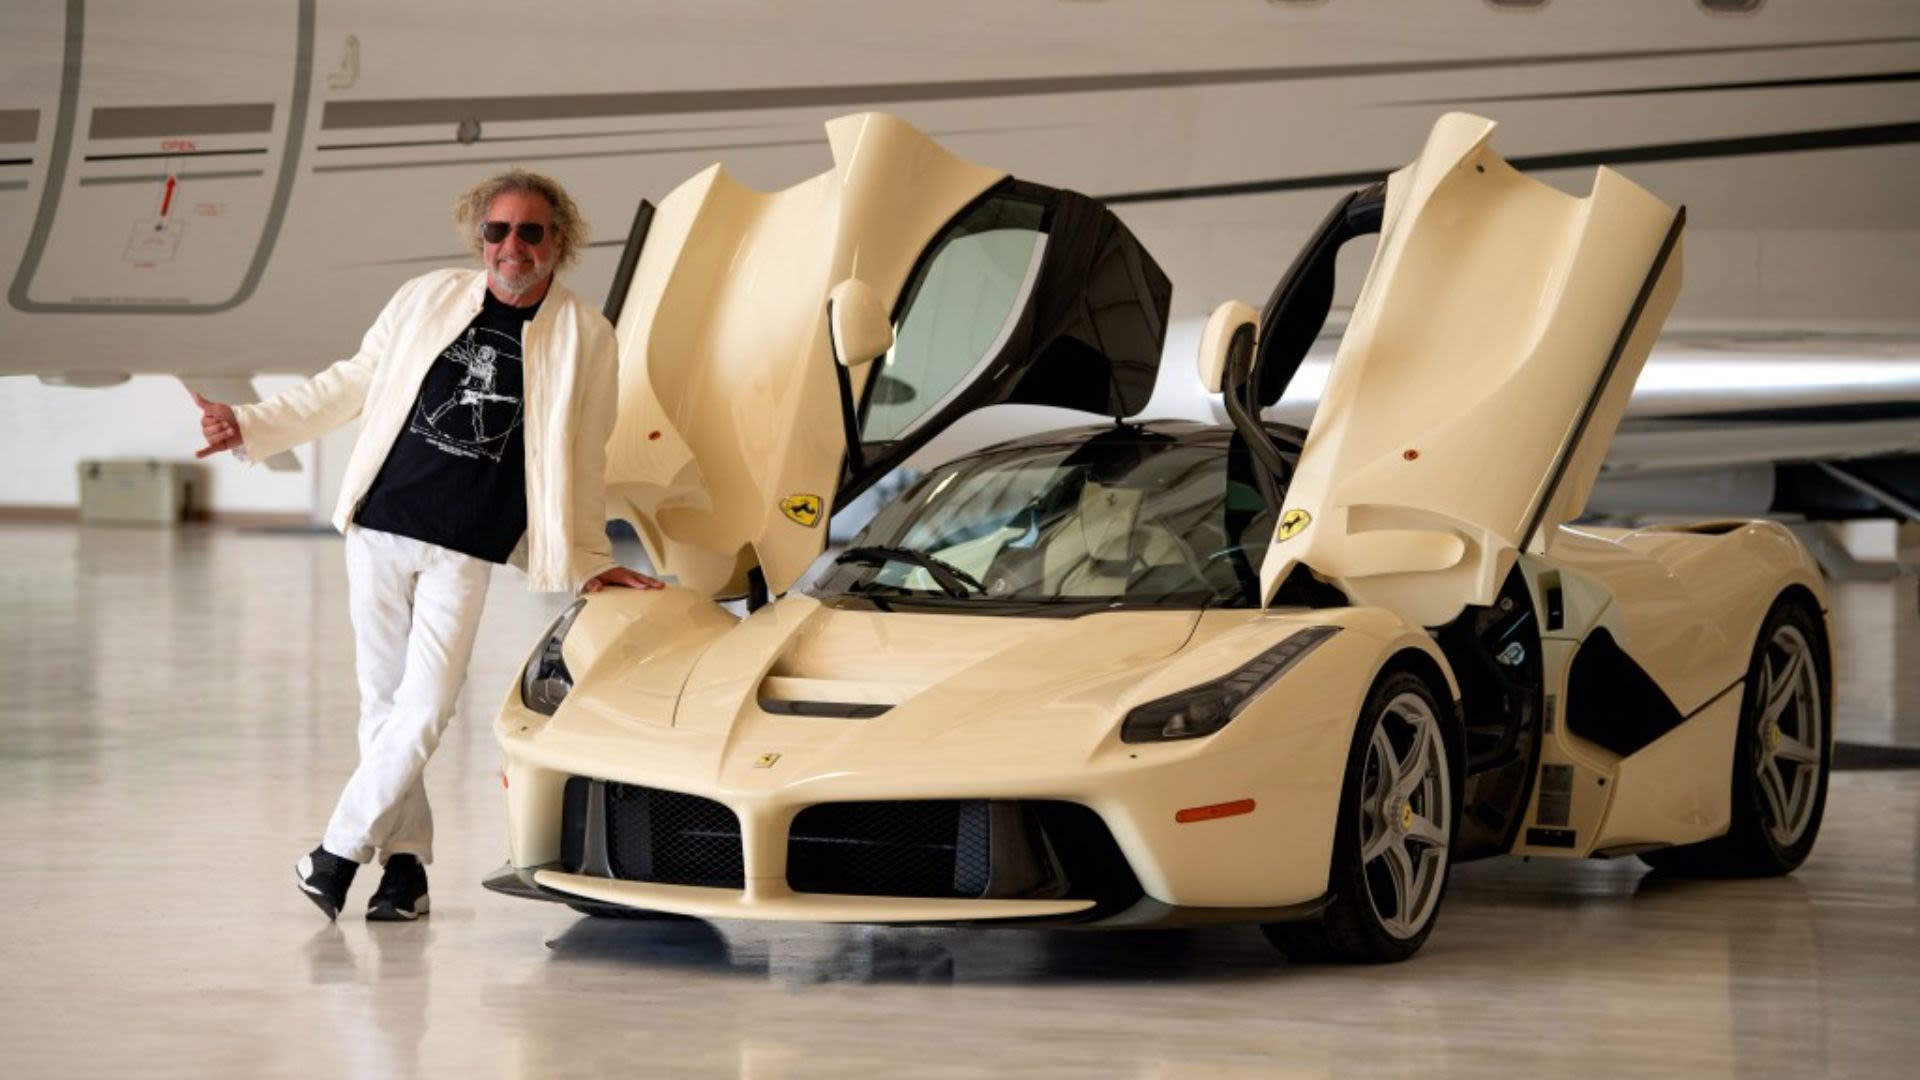 Sammy Hagar's Custom 2015 Ferrari LaFerrari to Headline Barrett-Jackson Scottsdale Fall Auction